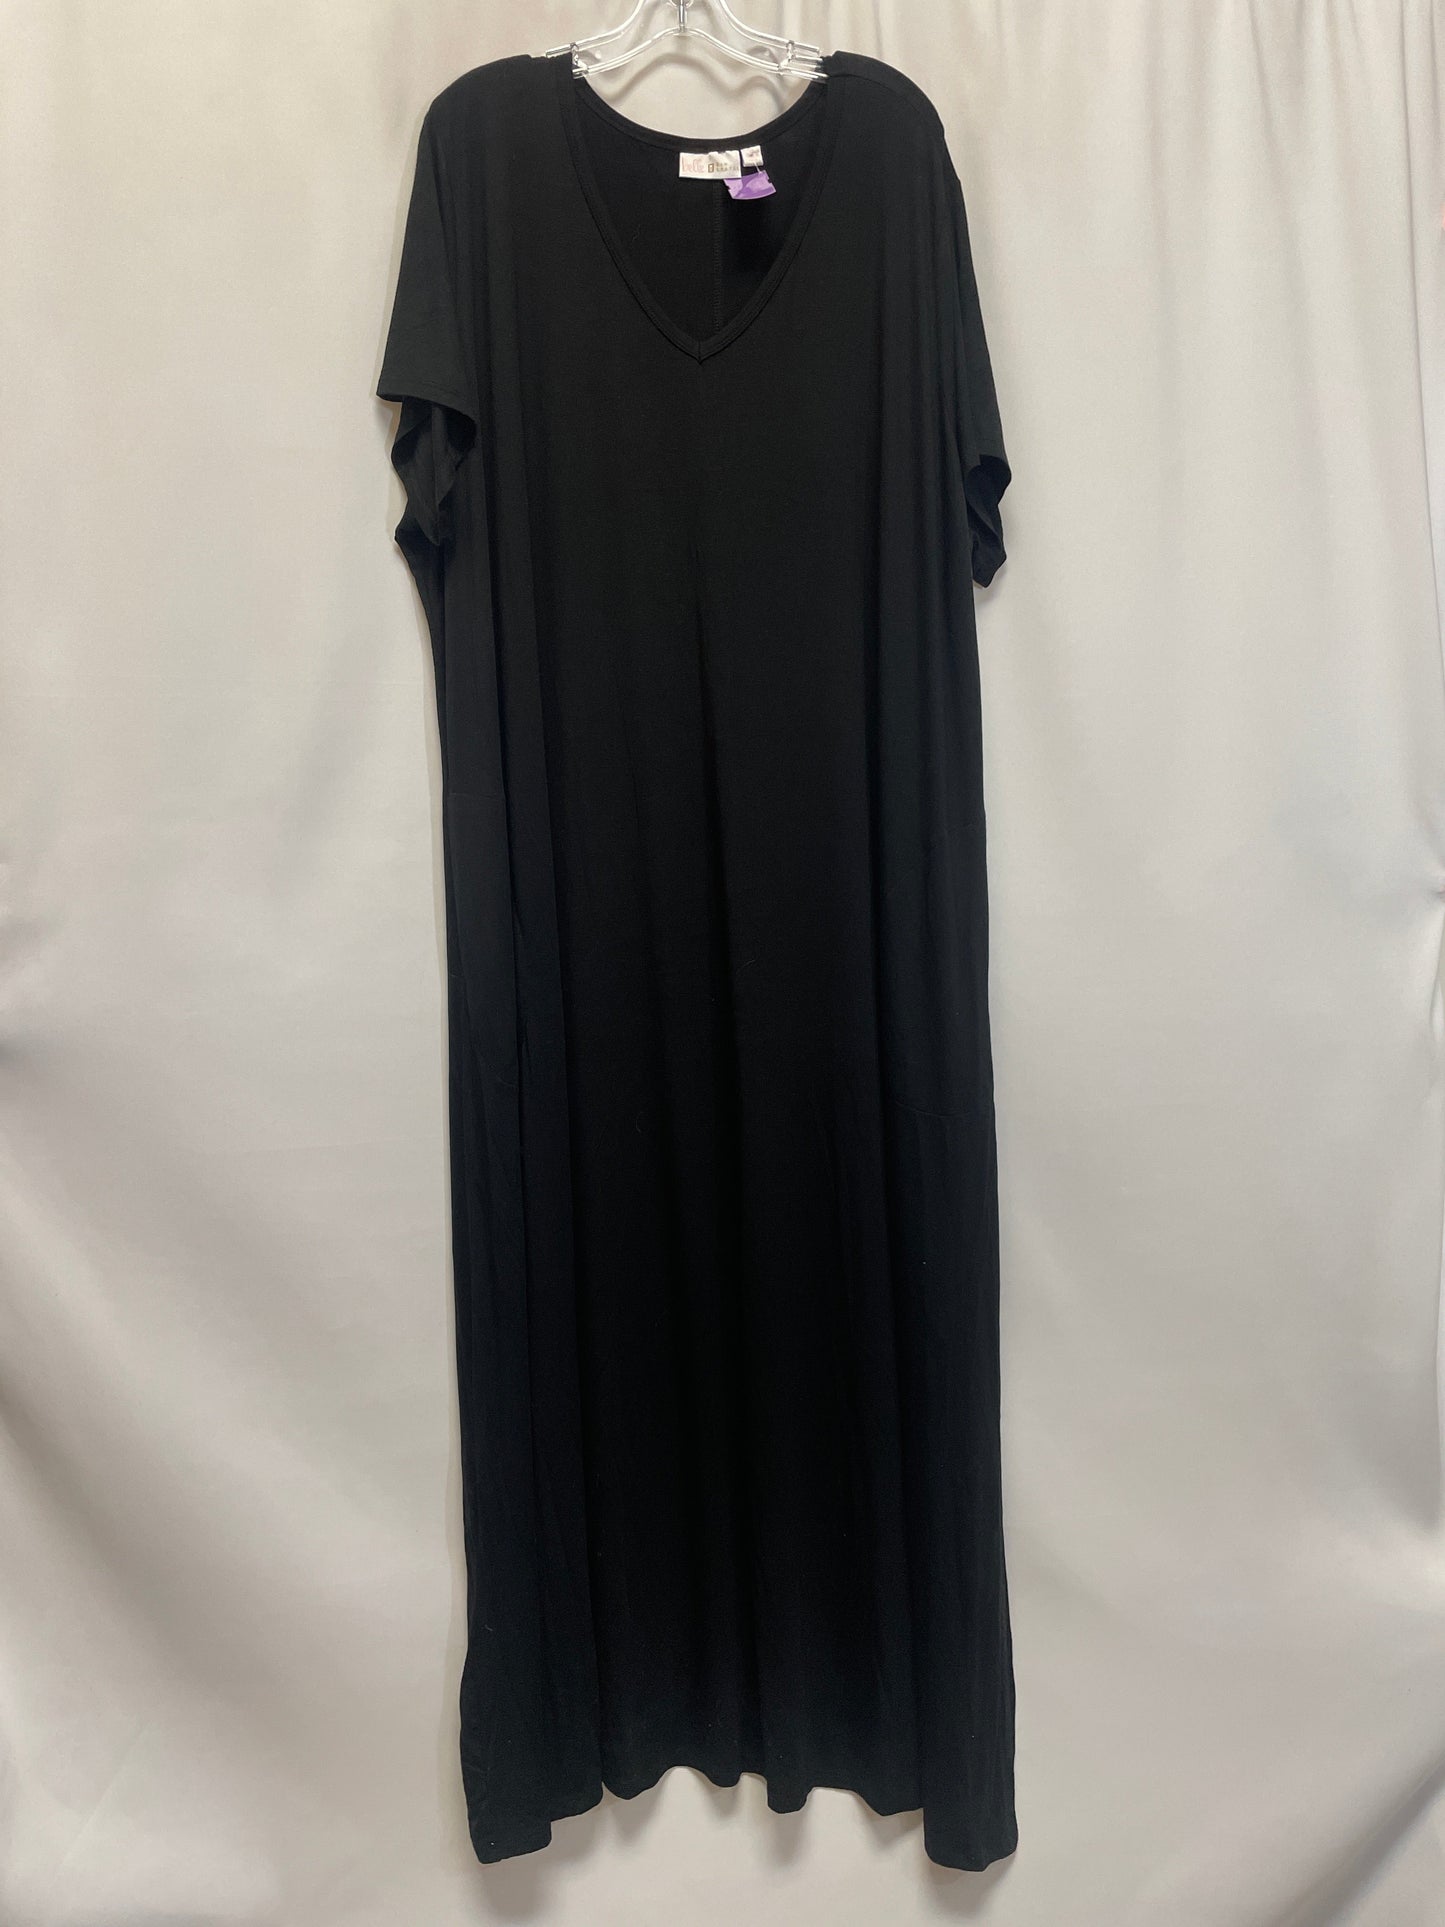 Black Dress Casual Maxi Clothes Mentor, Size 3x